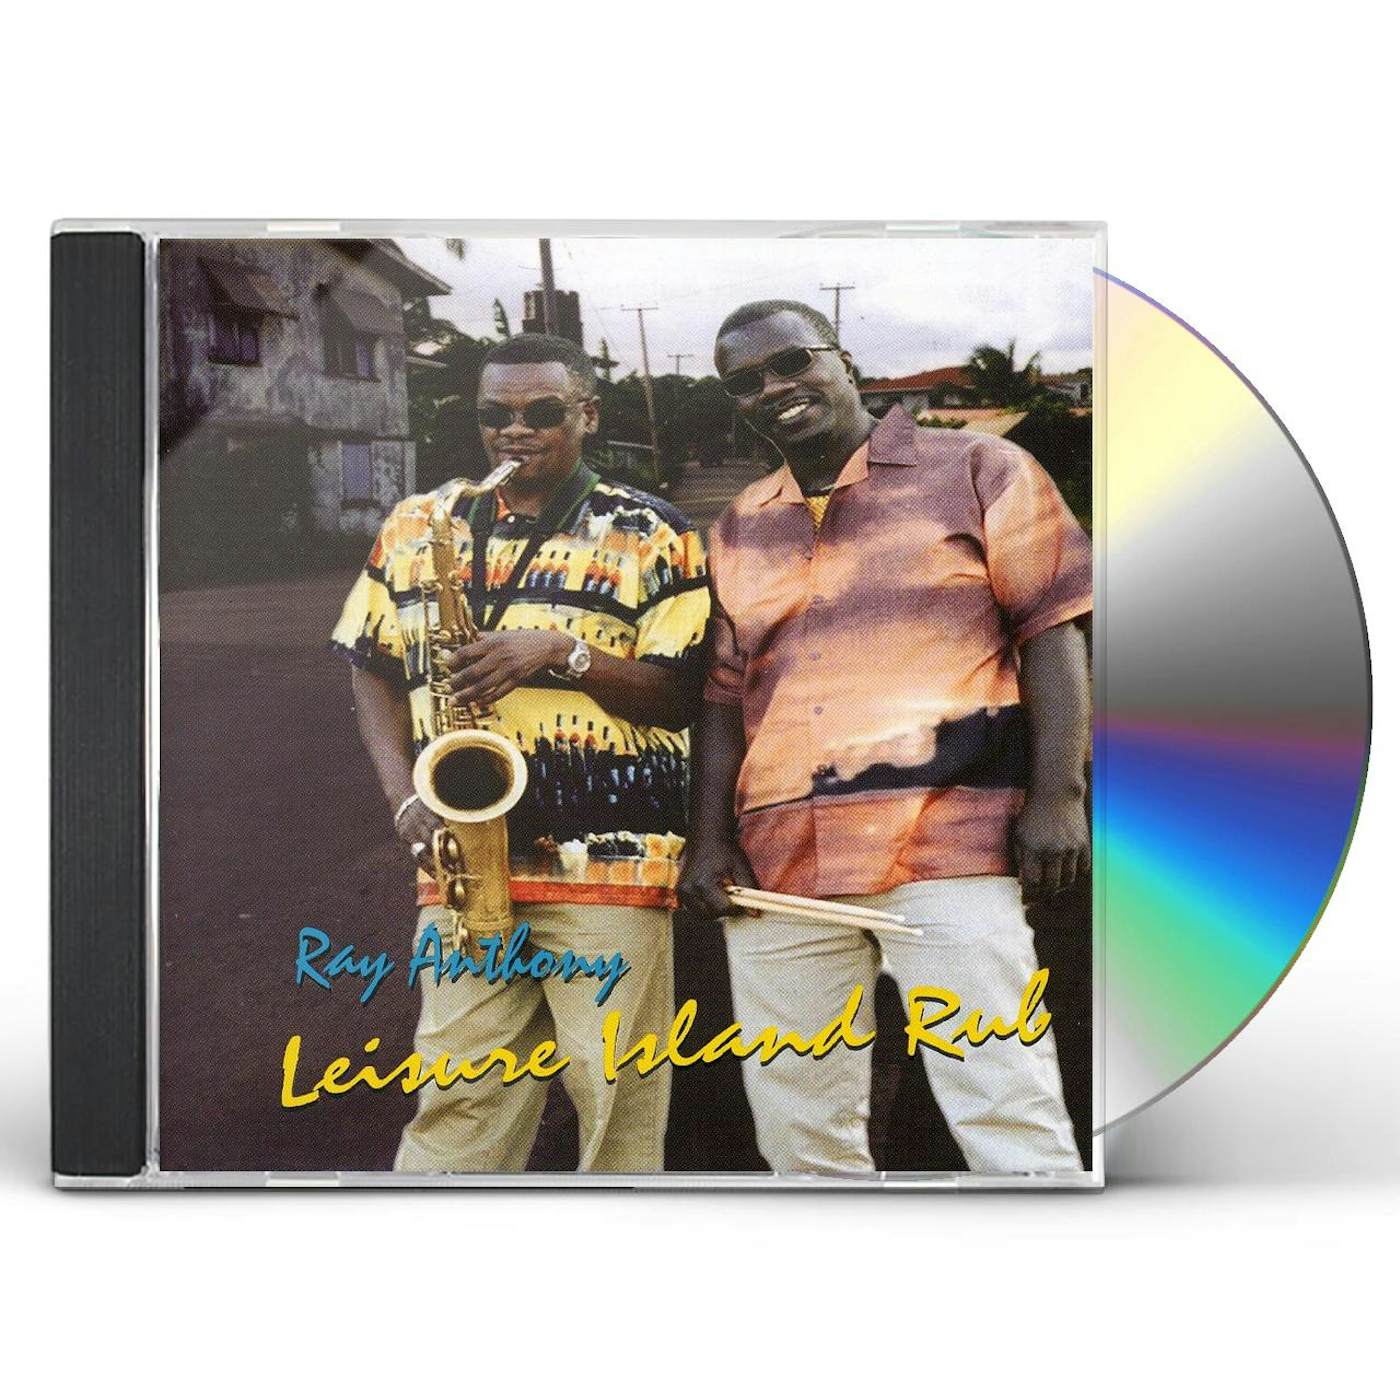 Ray Anthony LEISURE ISLAND RUB CD